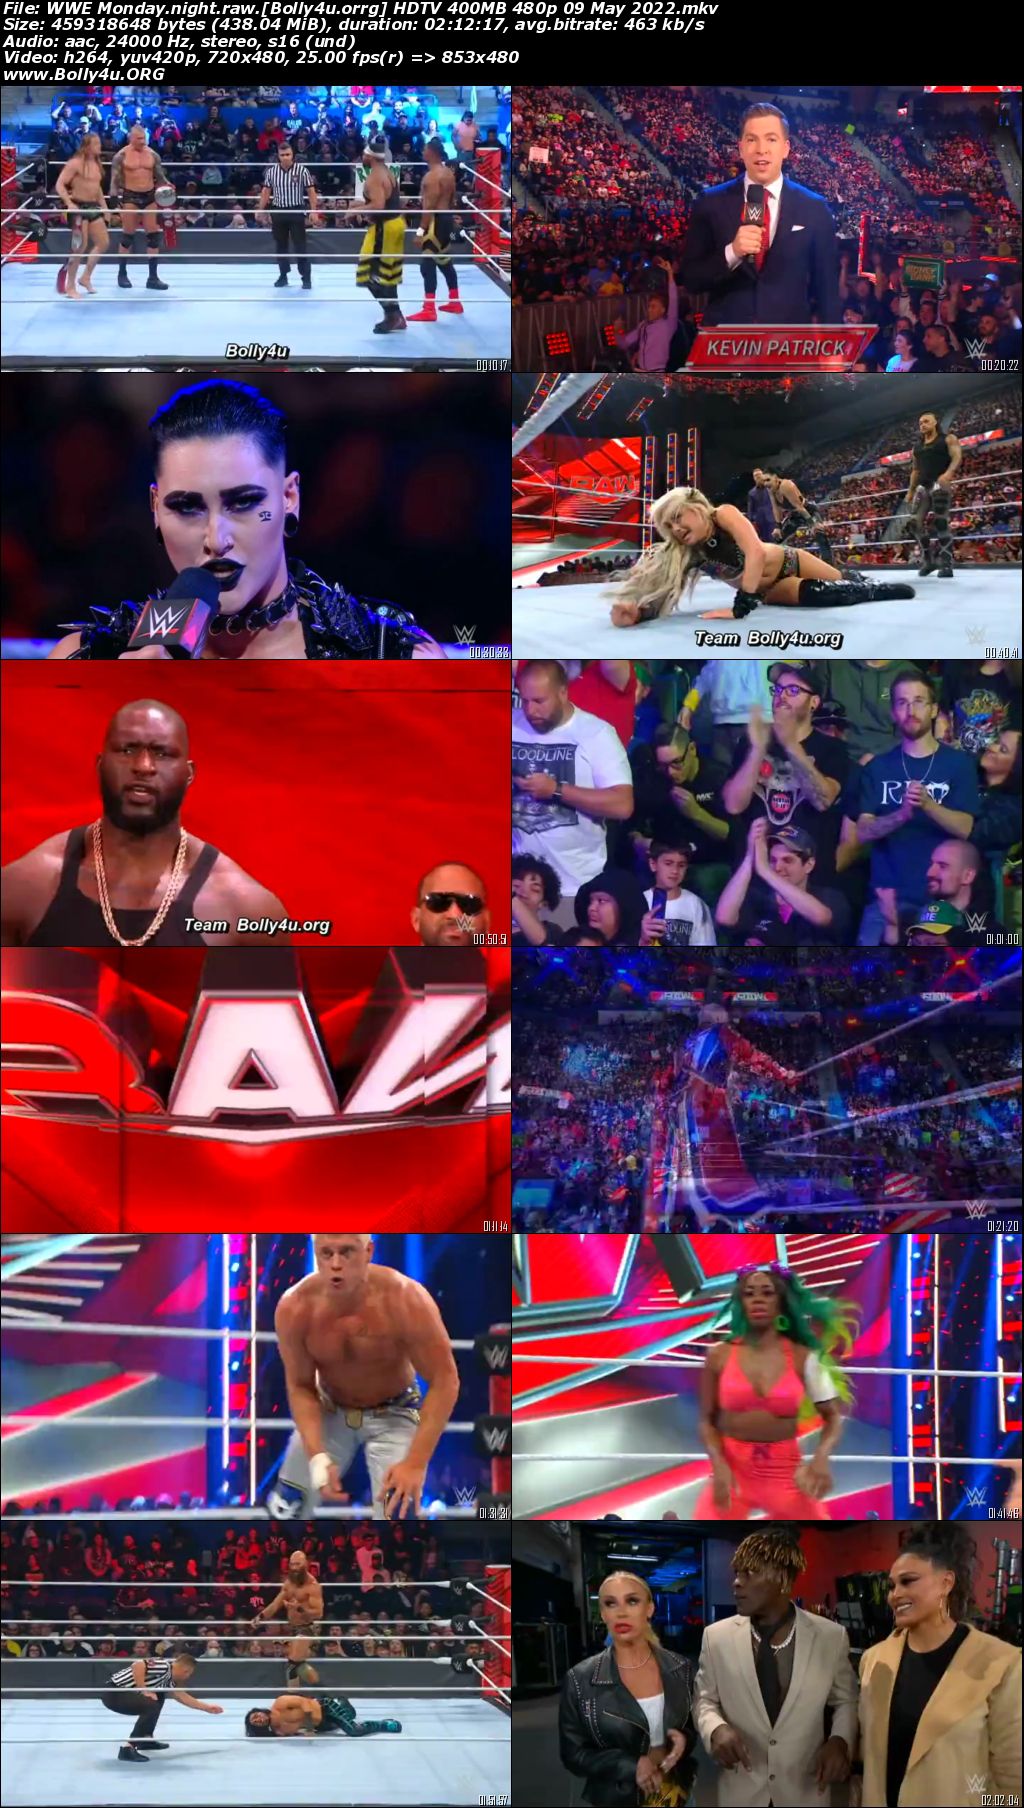 WWE Monday Night Raw HDTV 400MB 480p 09 May 2022 Download